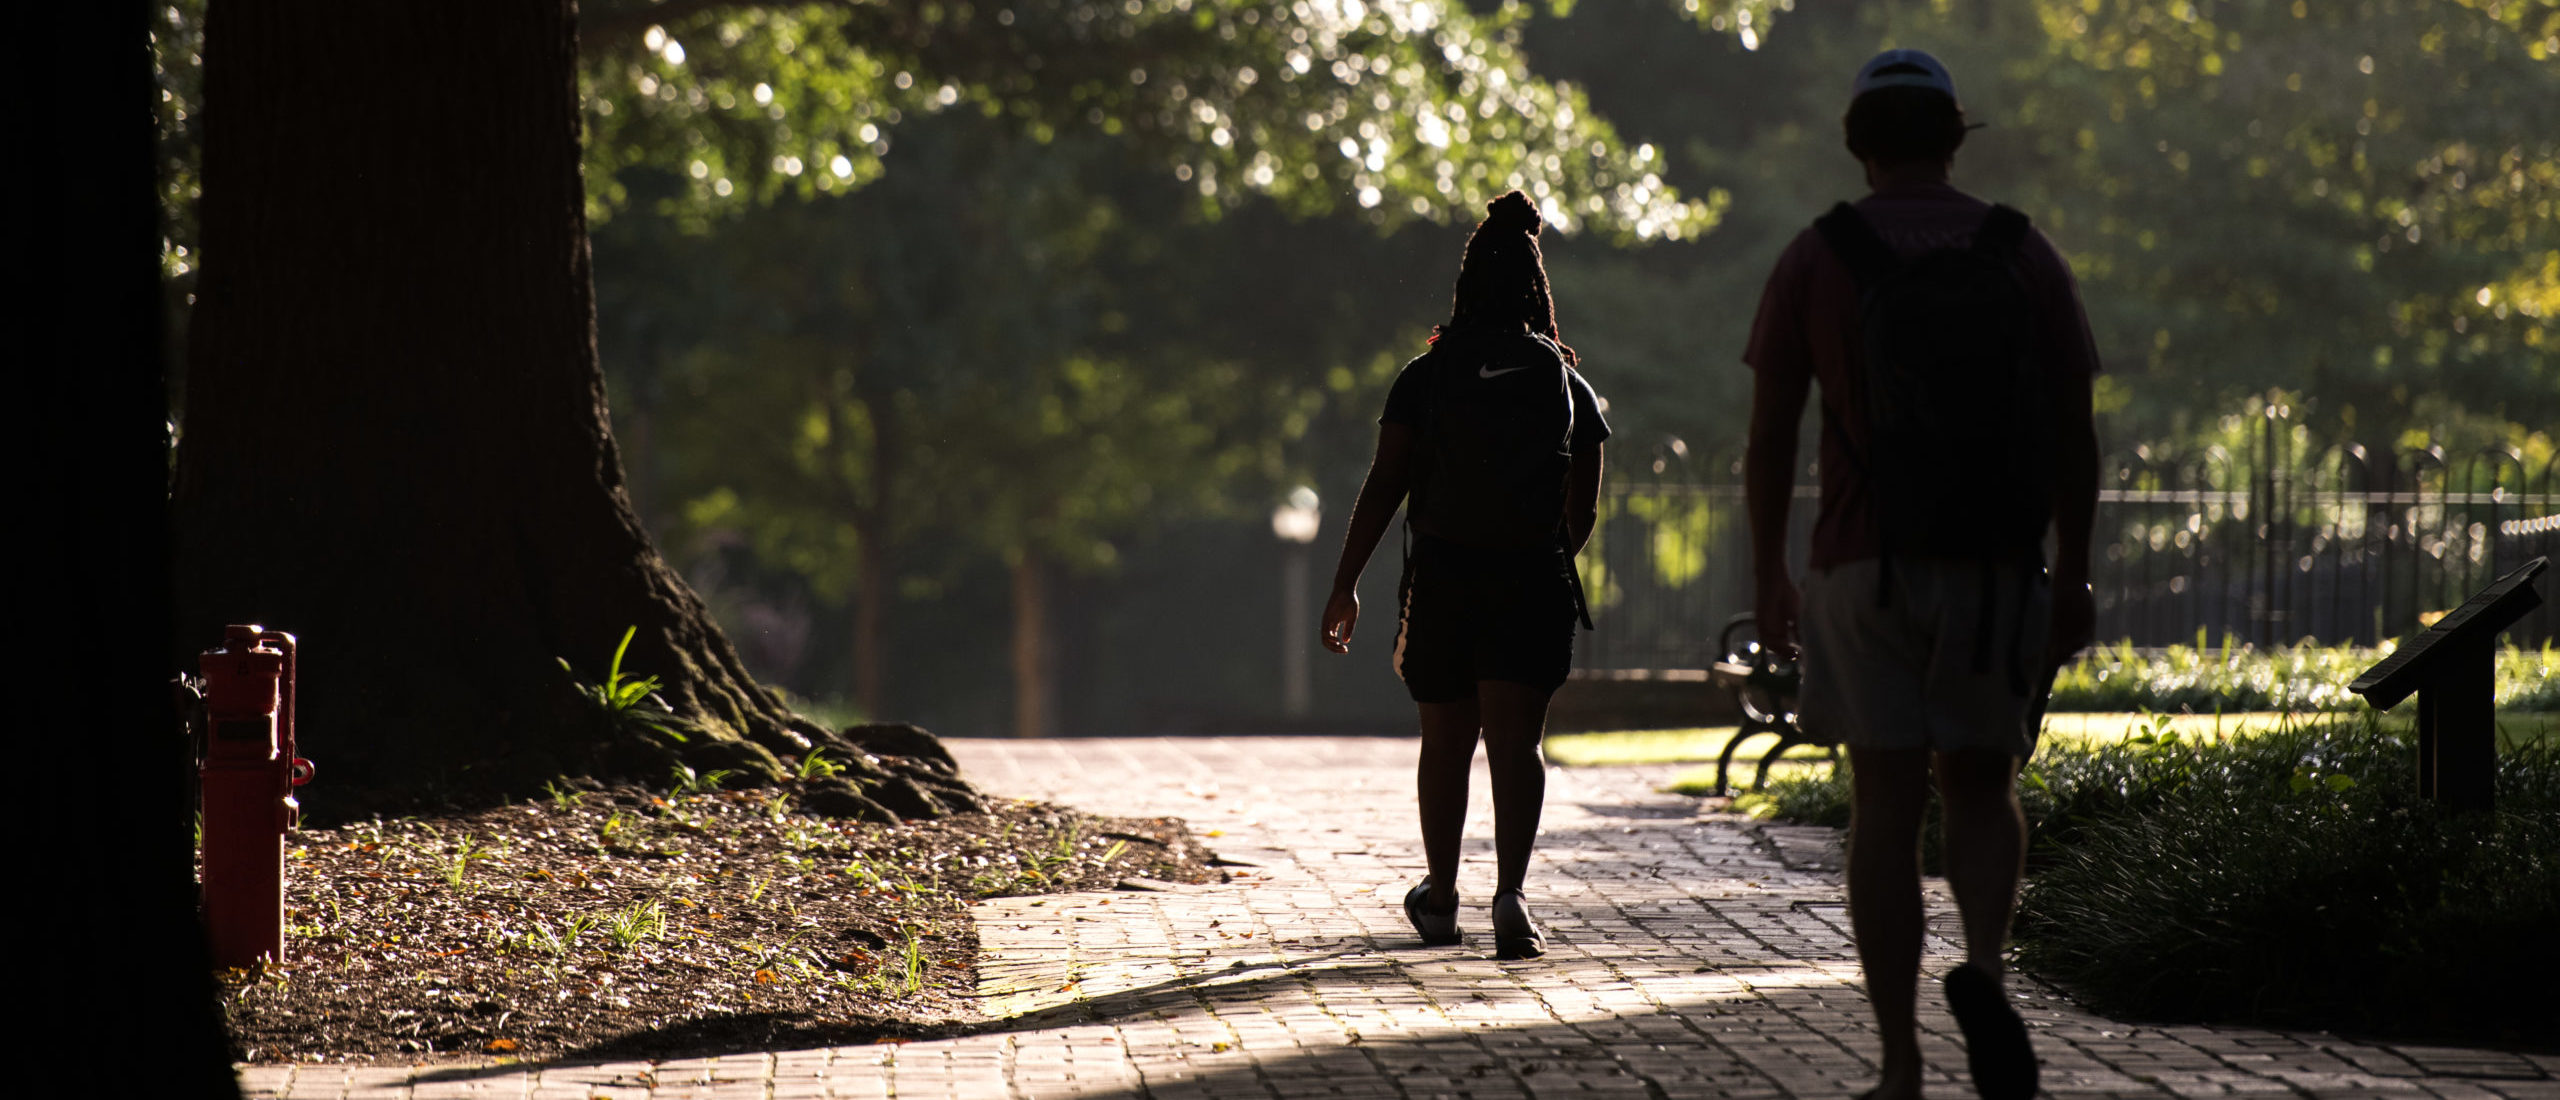 Students walk on campus at the University of South Carolina on September 3, 2020 in Columbia, South Carolina.